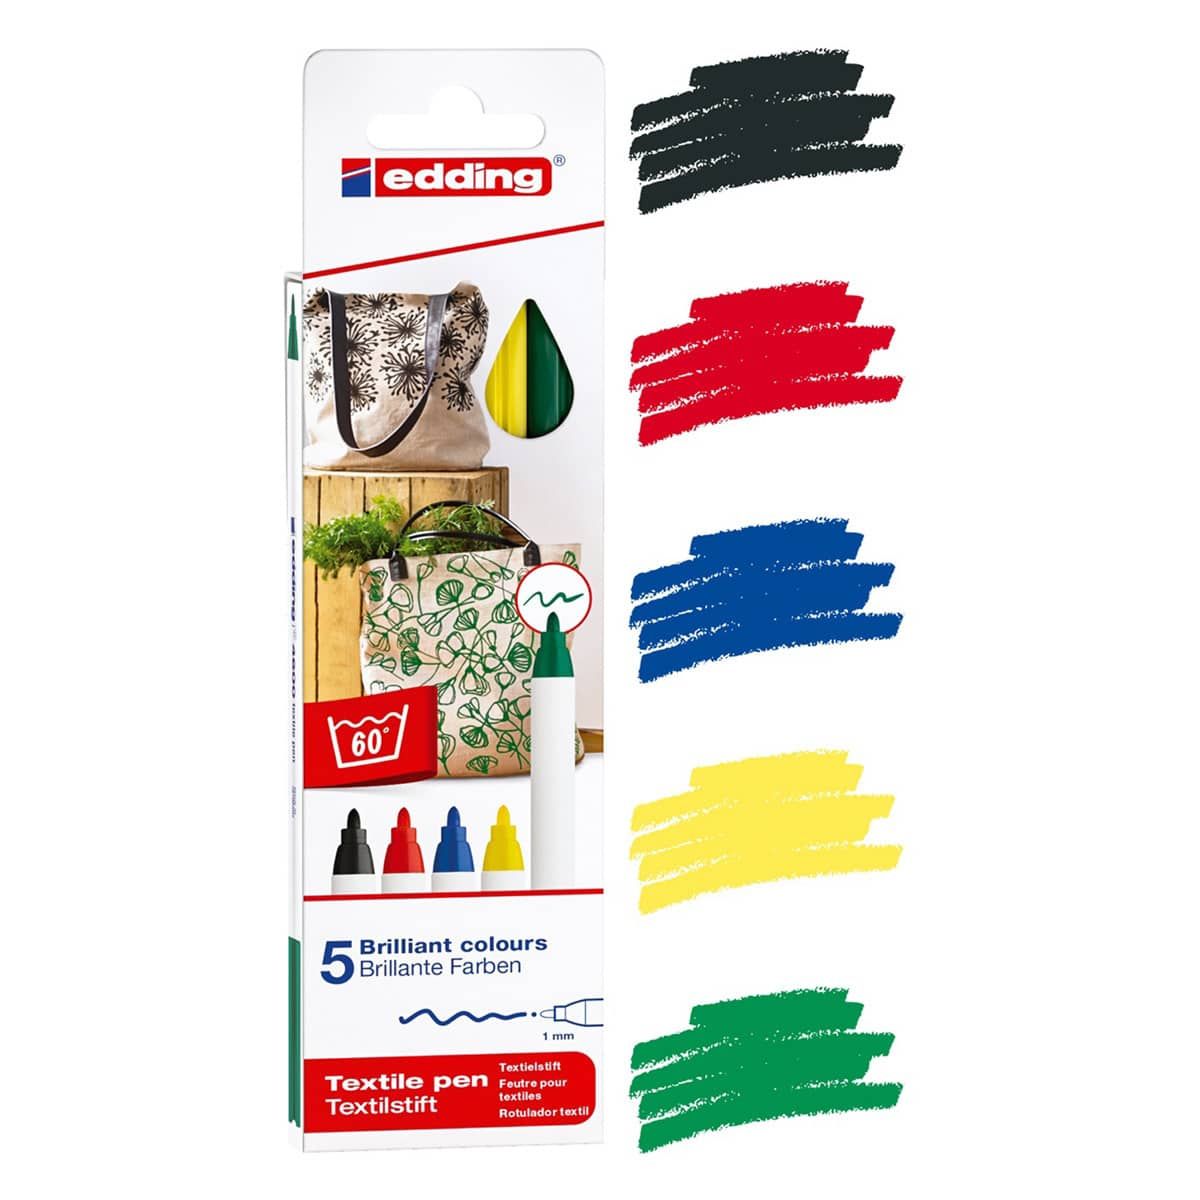 Edding 4600 Textile Pens - Pack of 5, Basic Colors